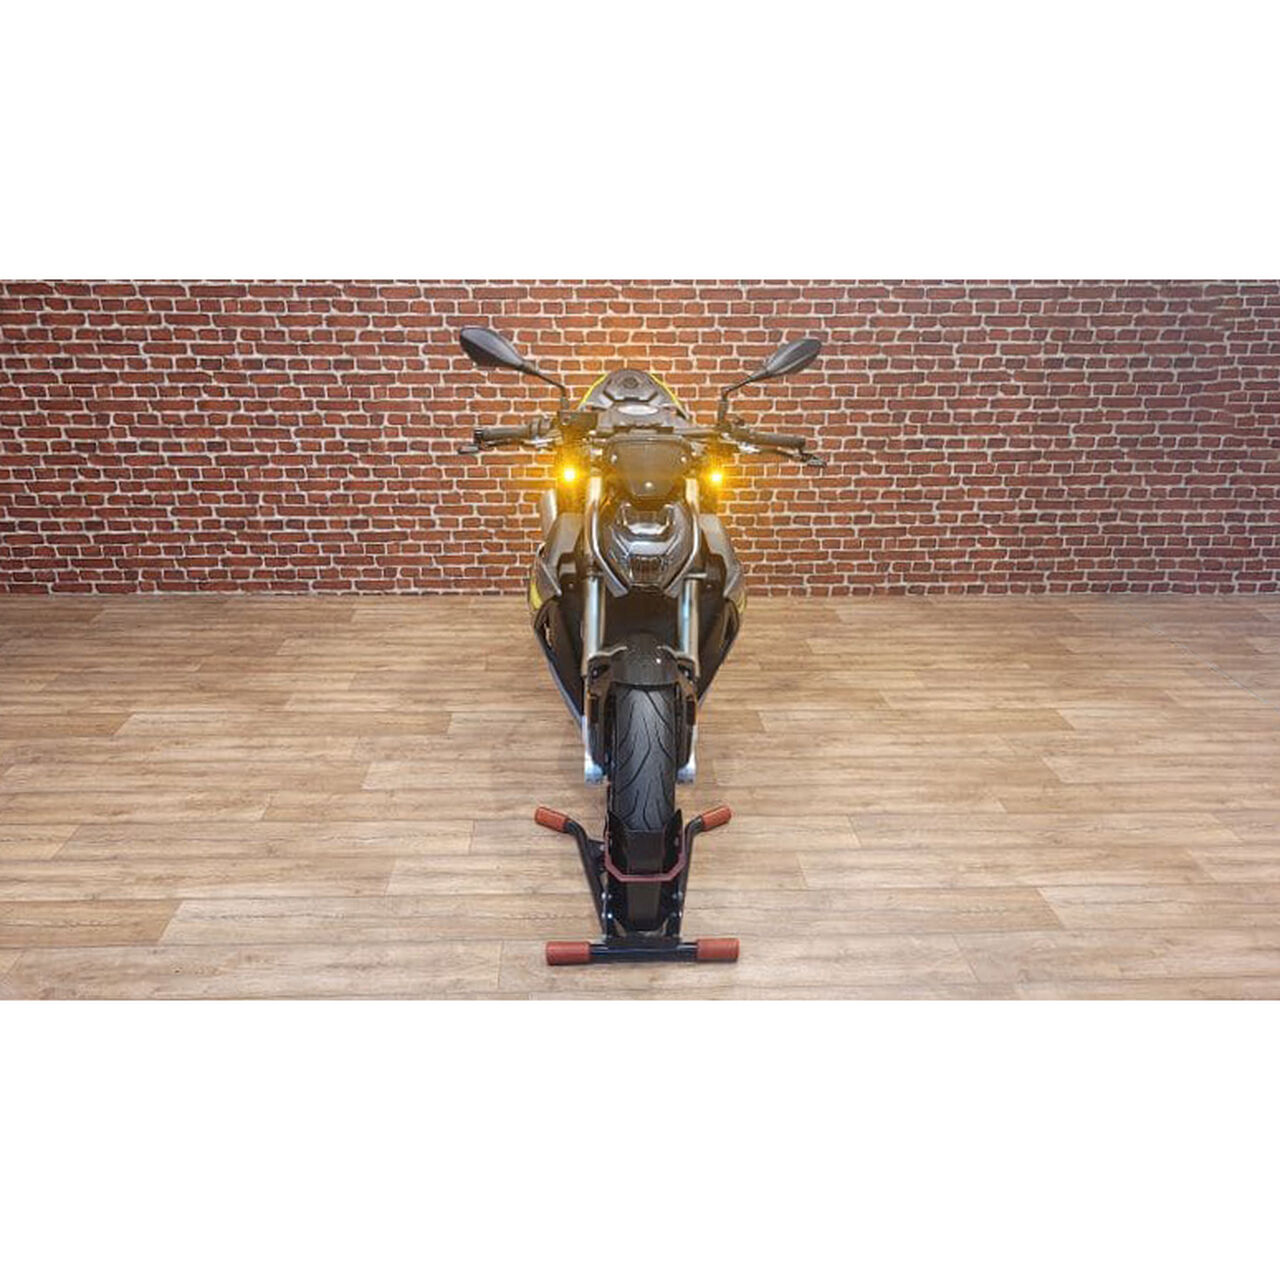 Kellermann LED Metall Blinker Atto® M5 schwarz, klarglas Neutral kaufen -  POLO Motorrad